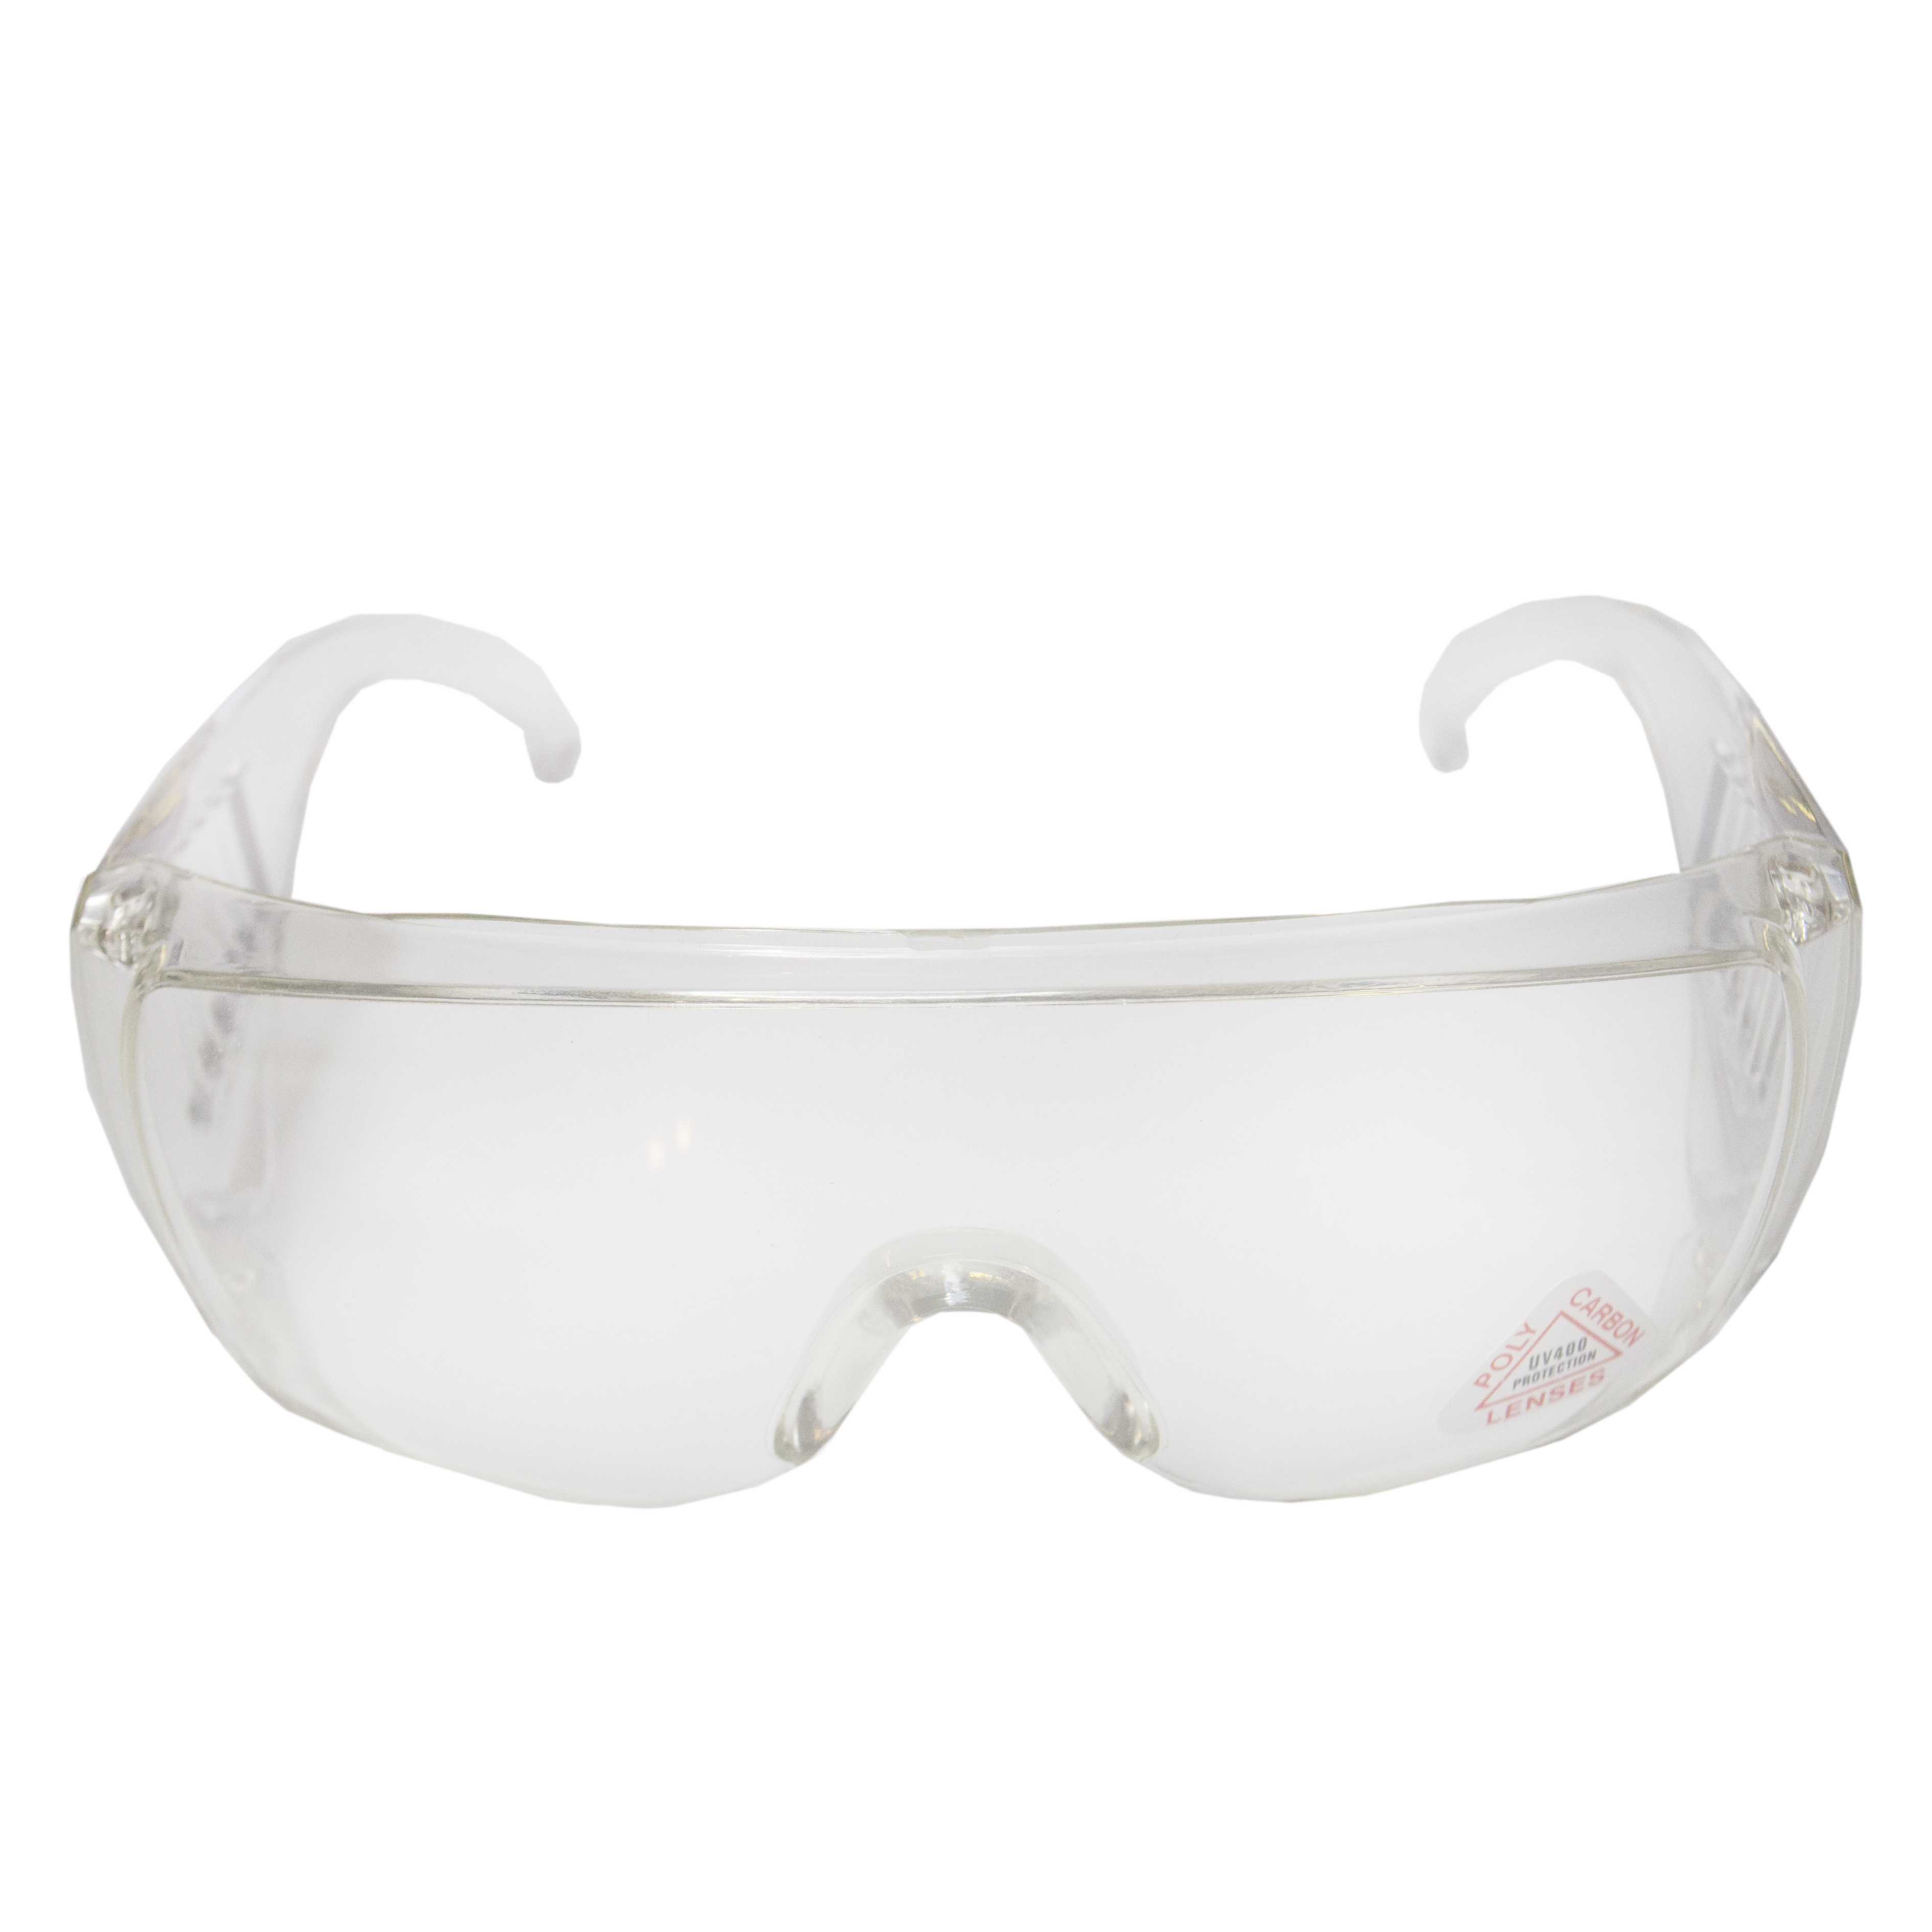 Medical Safety Glasses, transparent, 1 pc/box